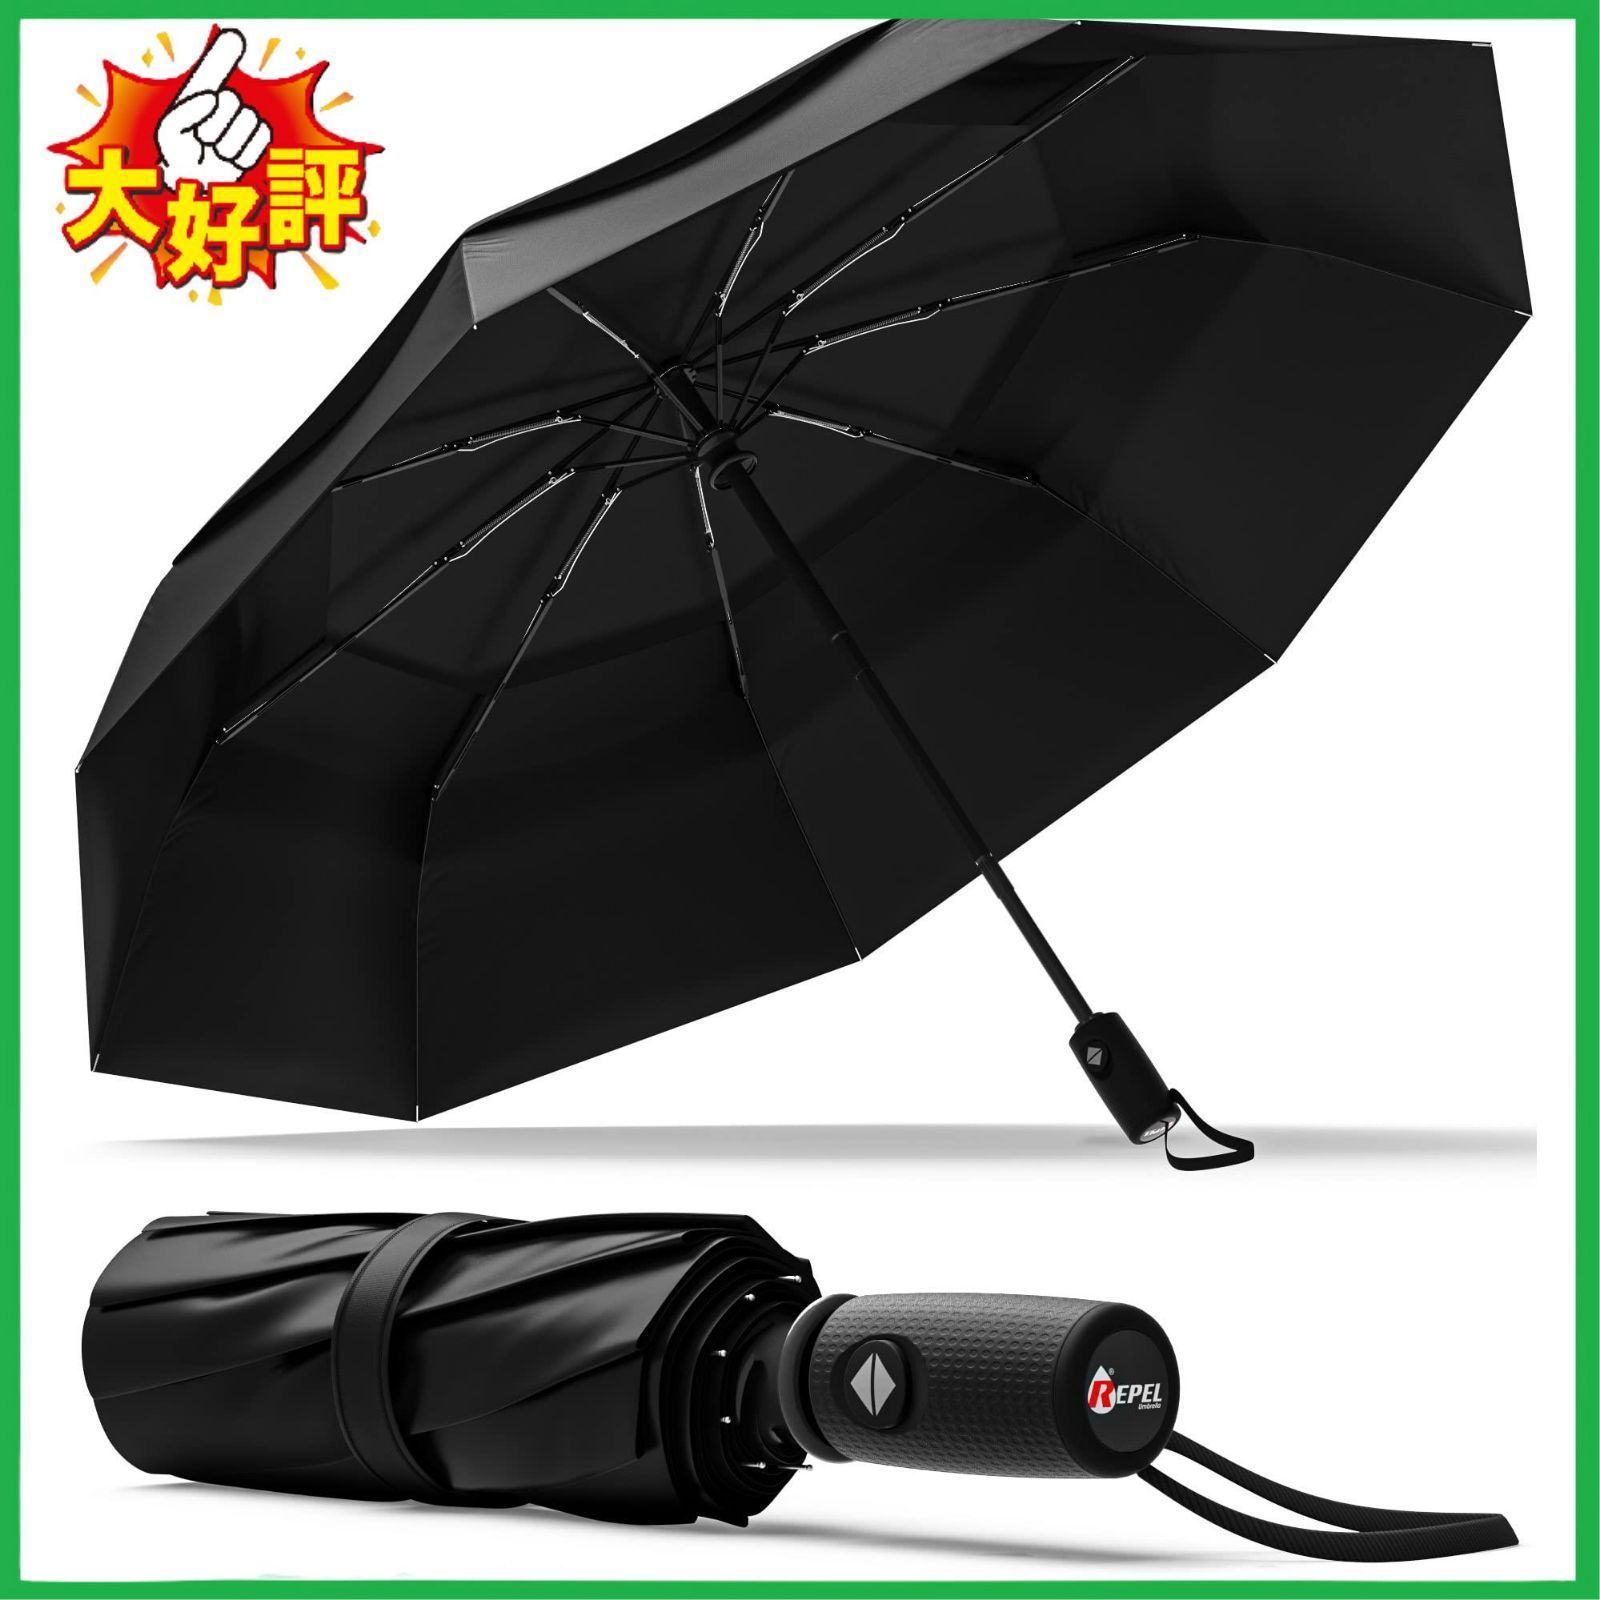 Repel Umbrella 防風トラベルアンブレラ 折りたたみ傘自動開閉